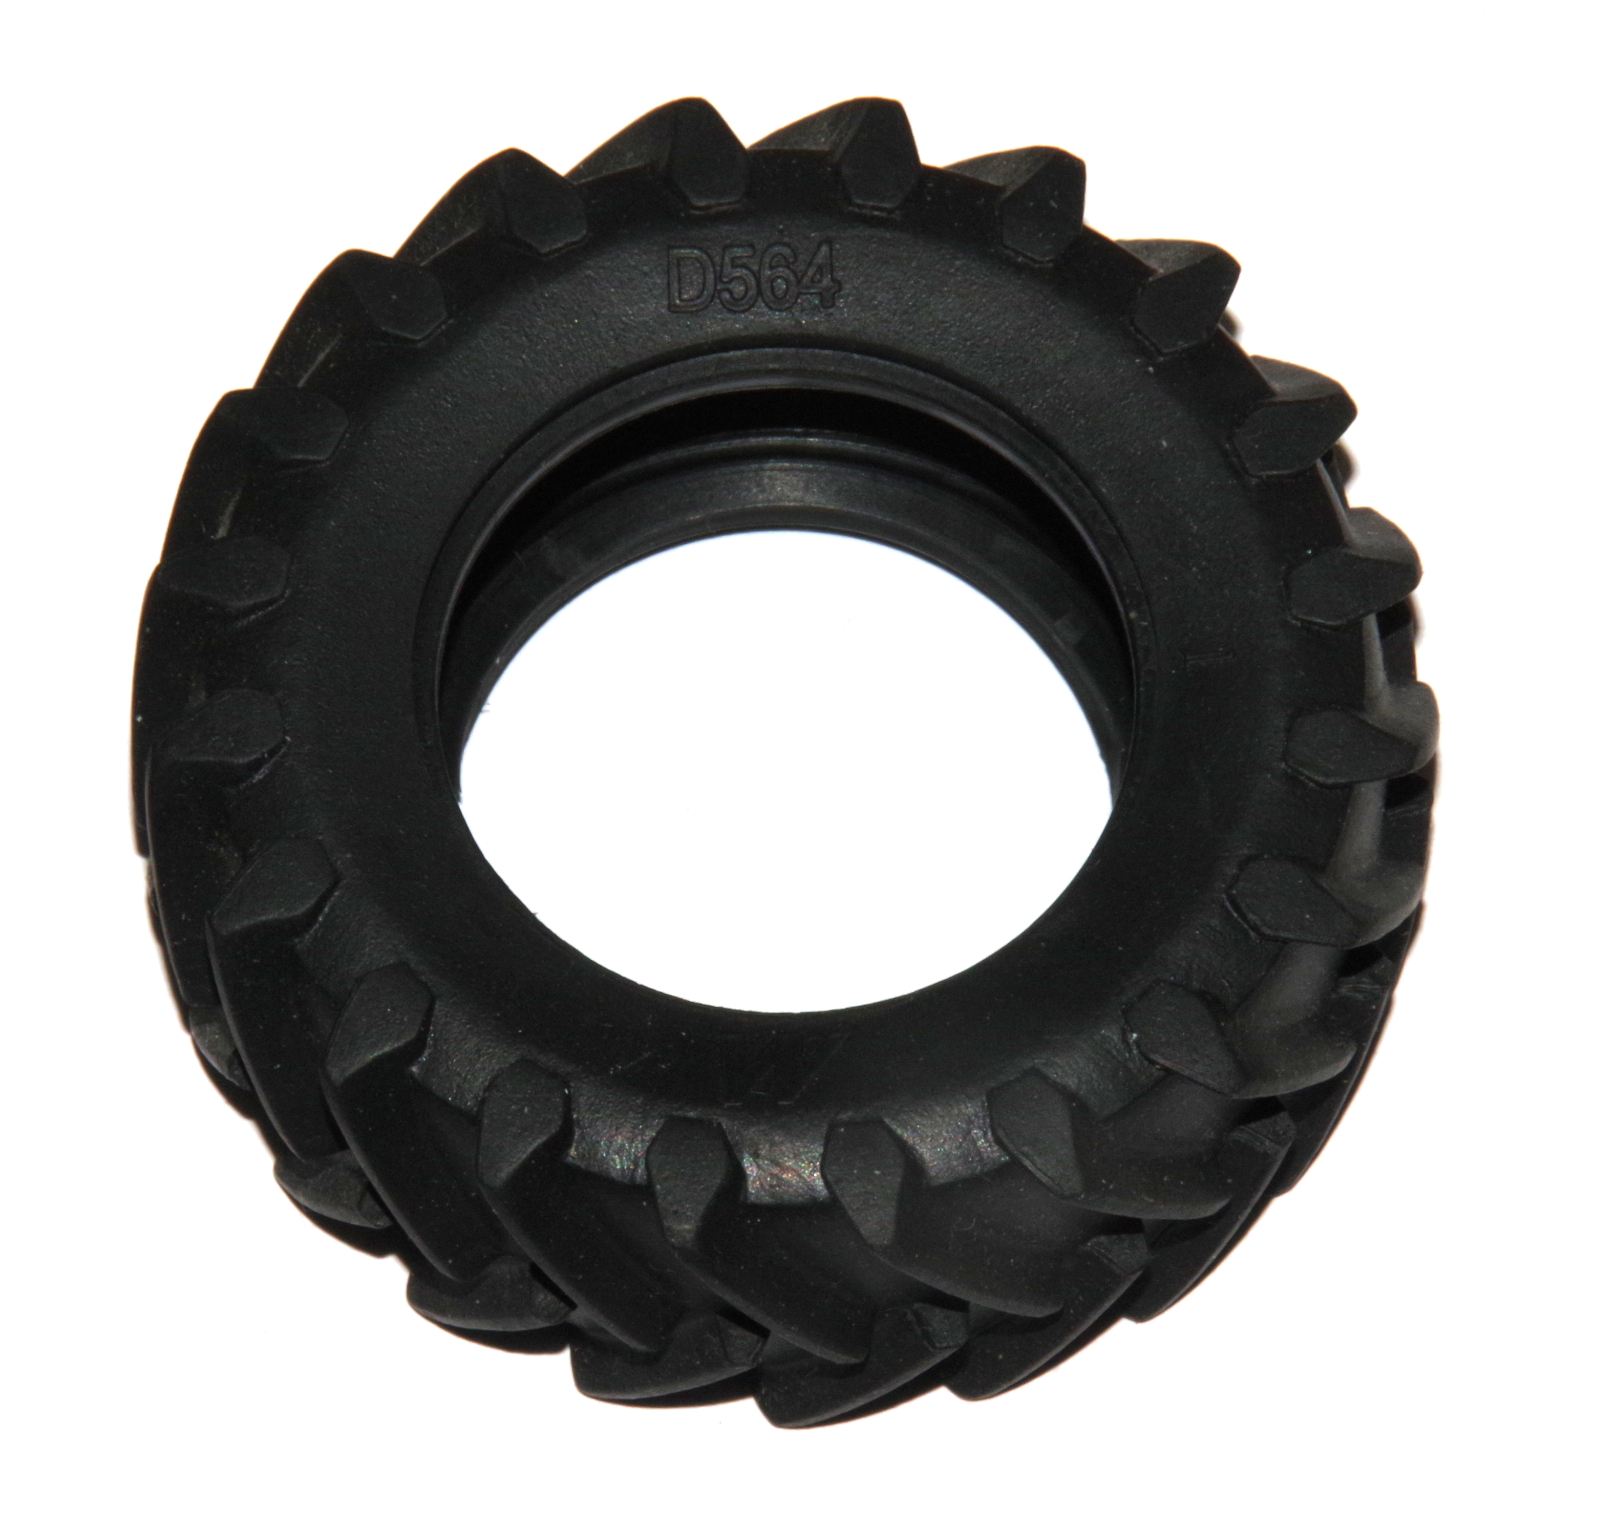 D564 Tractor Tyre Hollow 2½'' x ¾'' Black Original